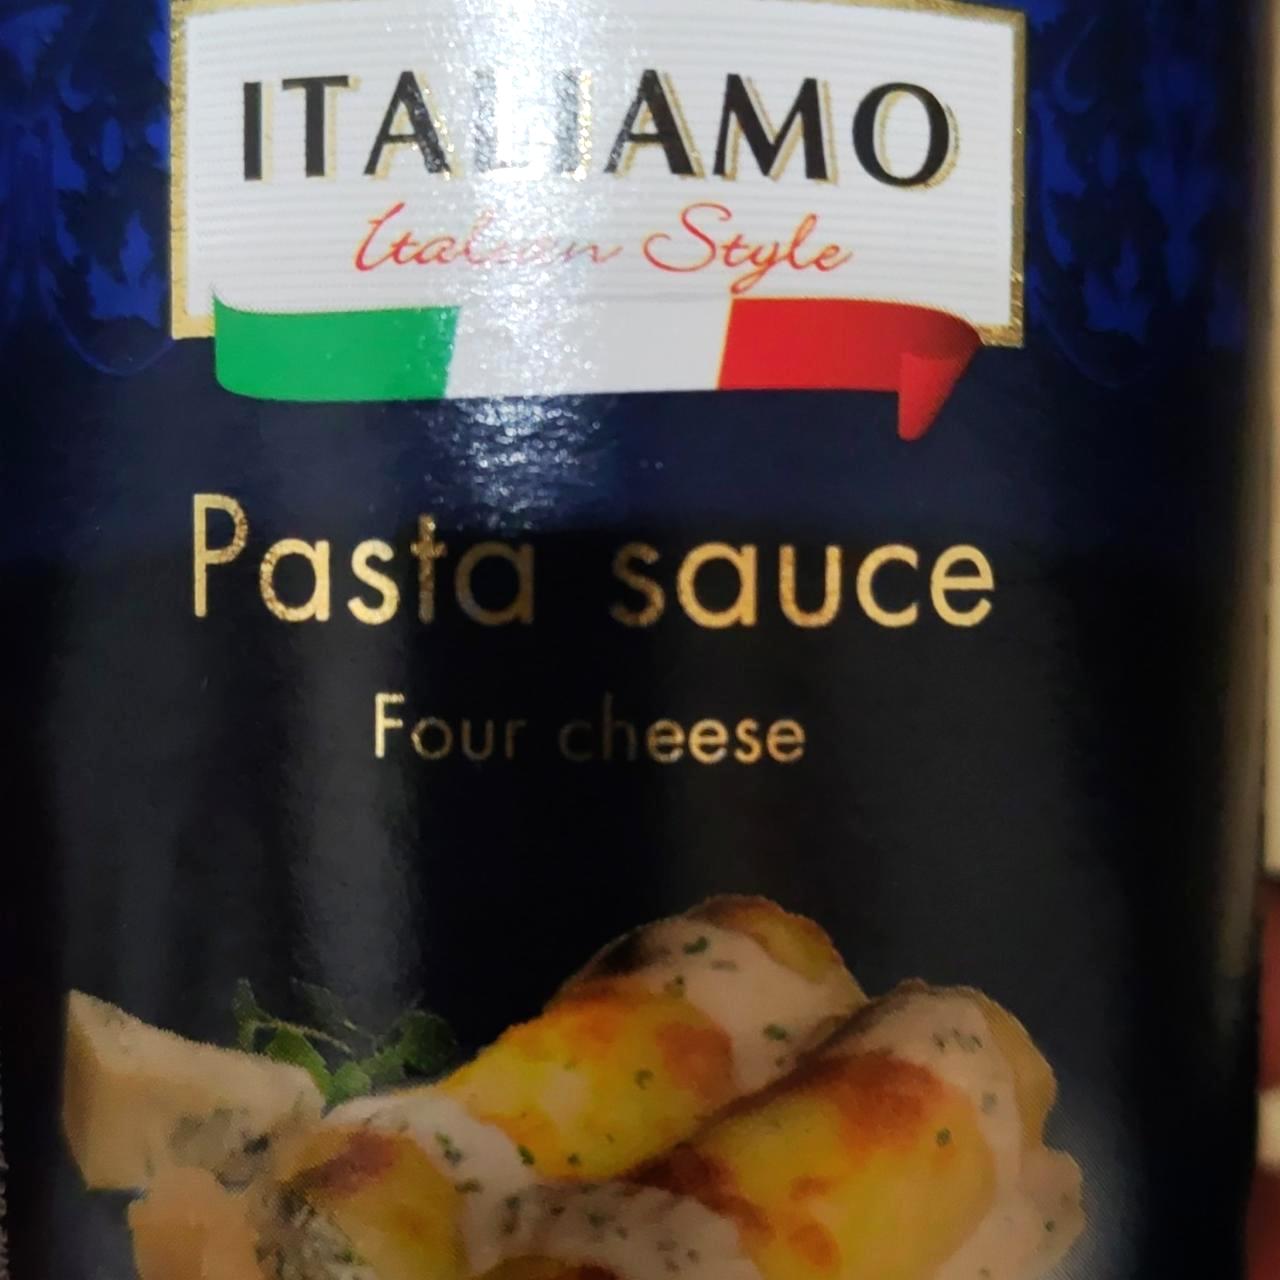 Képek - Pasta sauce four cheese Italiamo